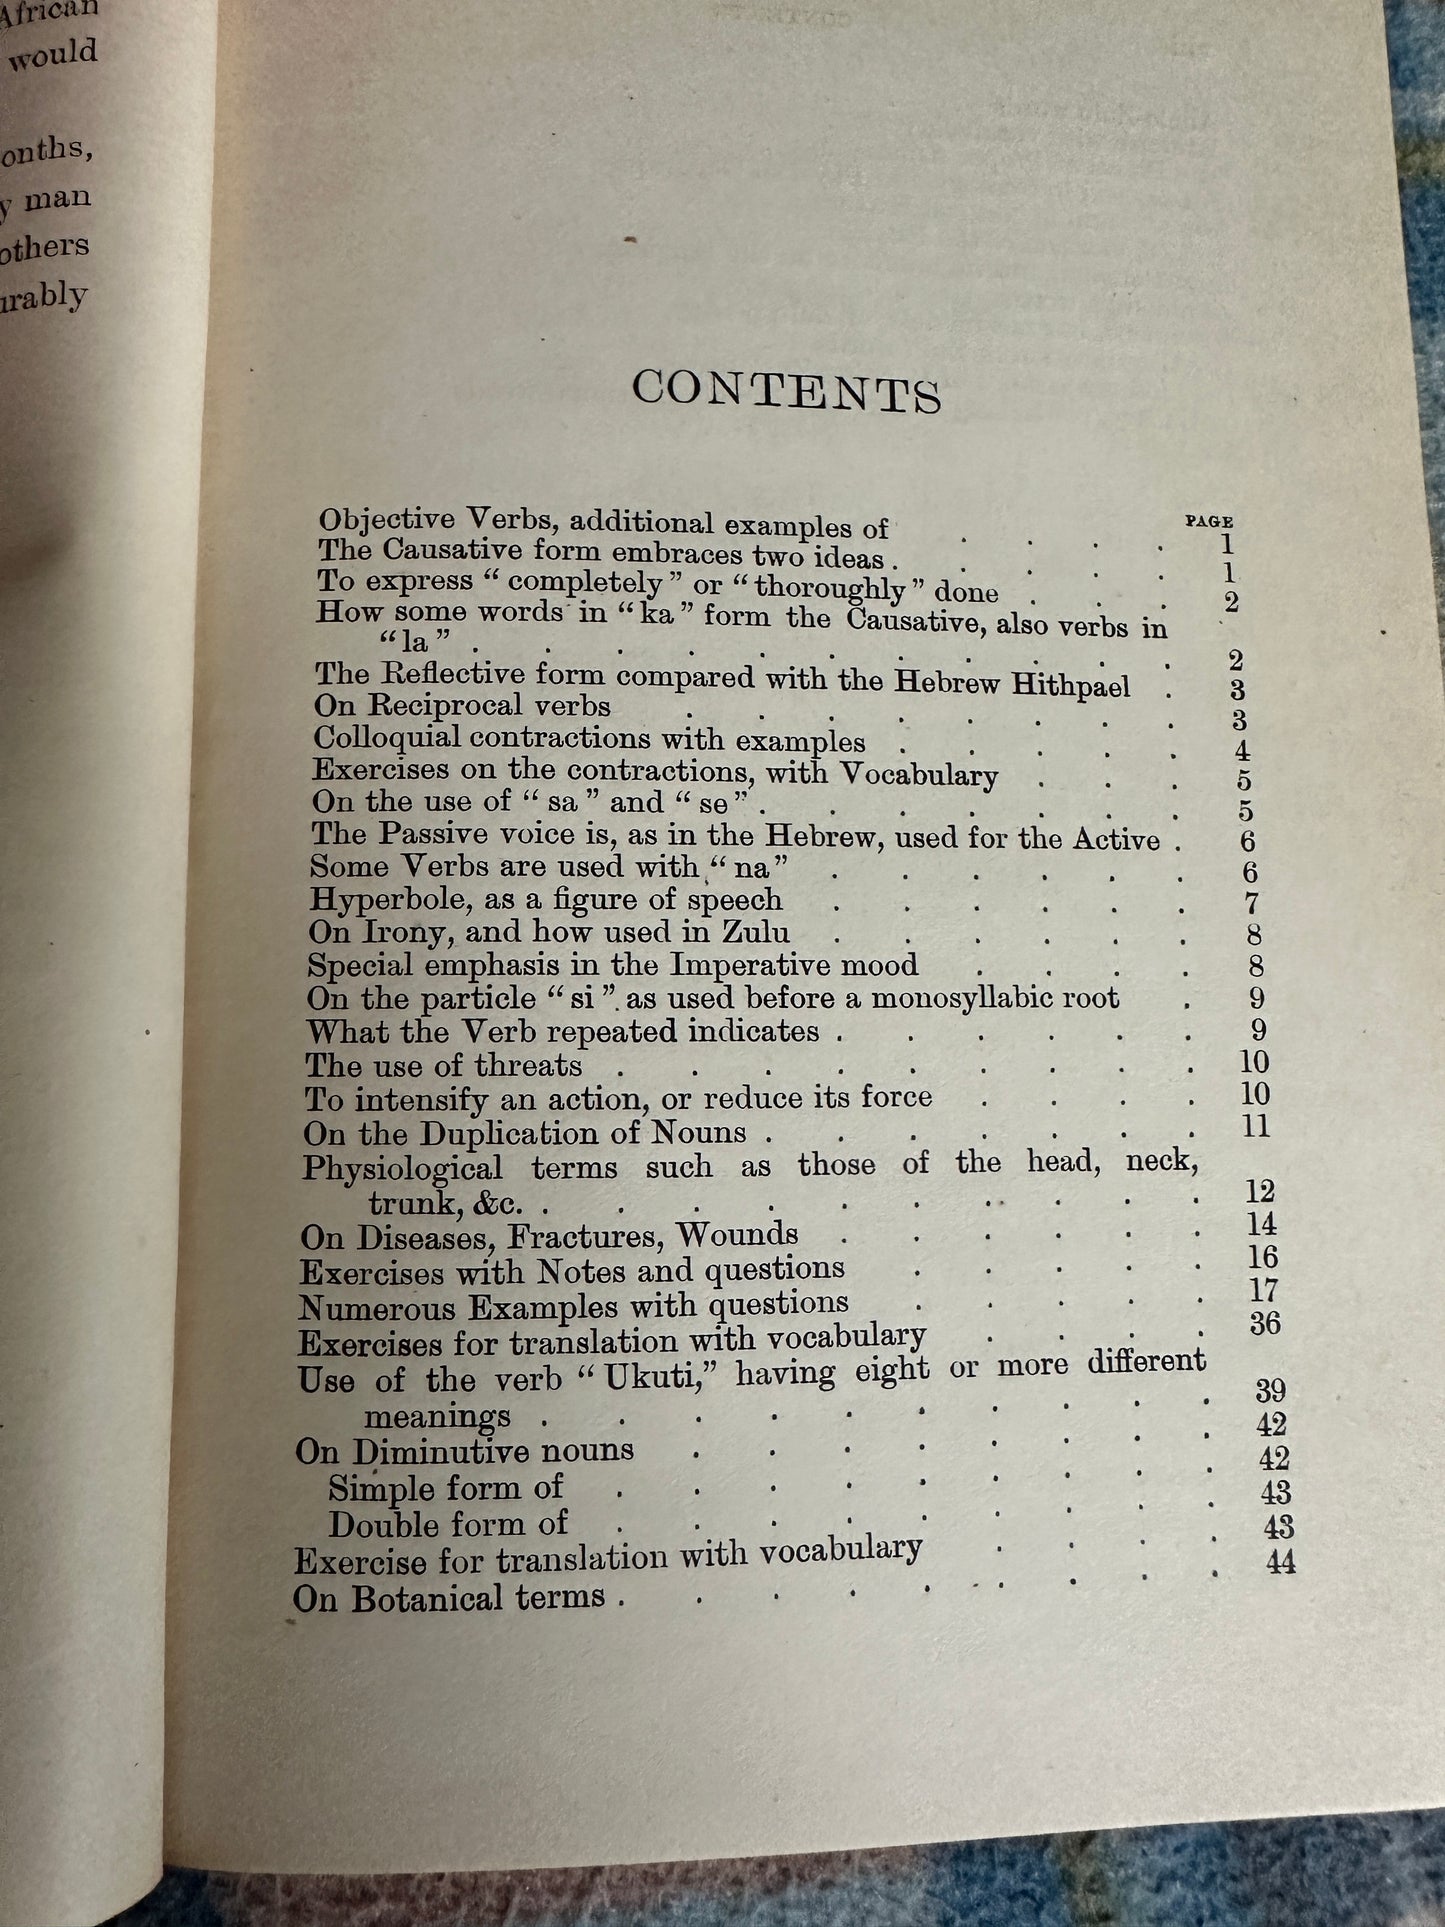 1900*1st* A Zulu Manual or Vade-Mecum - Rev. Charles Roberts(Kegan Paul, Trench, Trübner & Co Ltd)